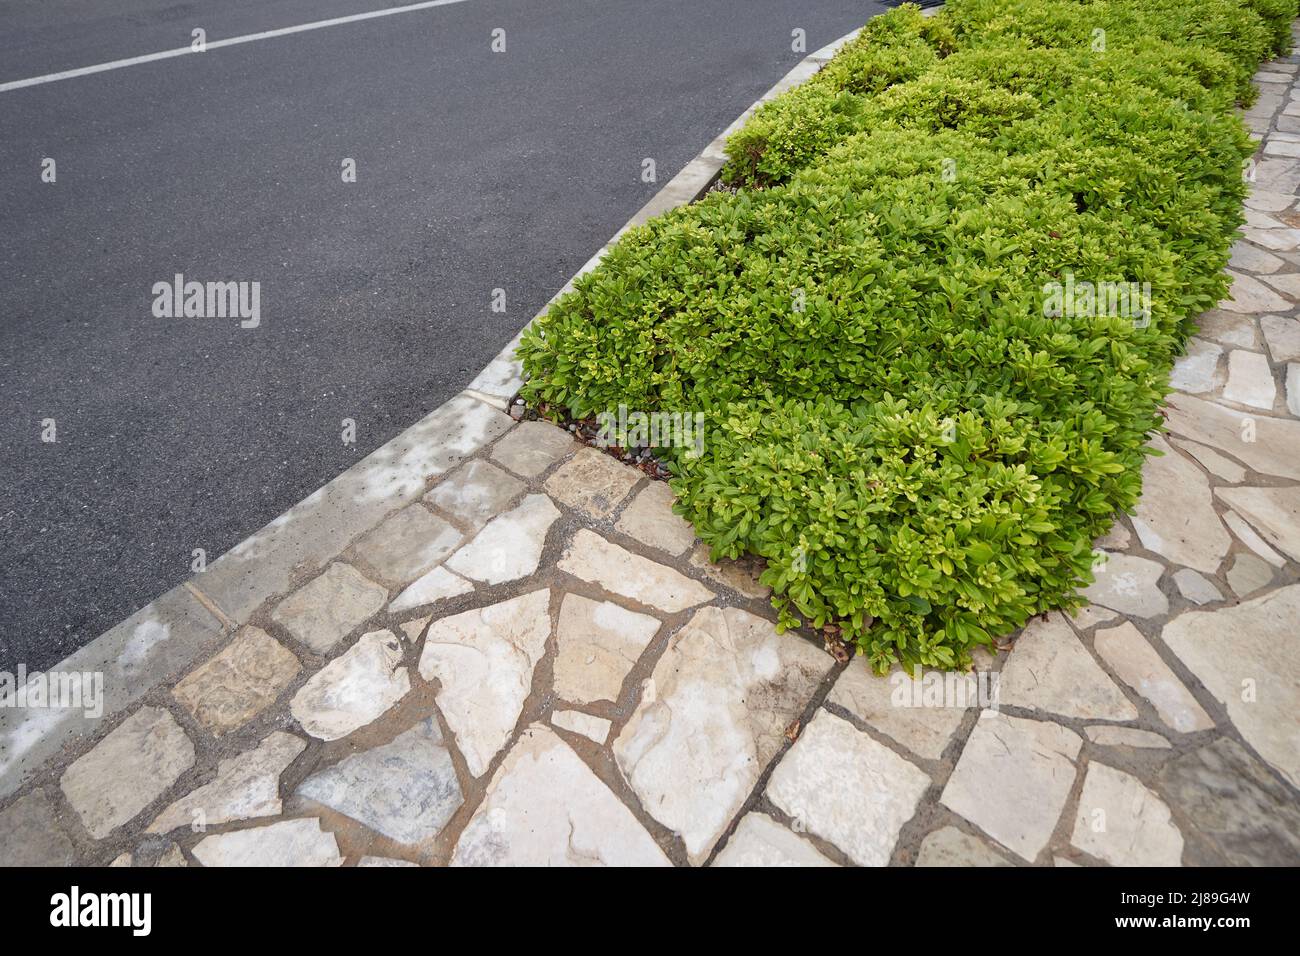 Boxwood bushes grow by the roadside of asphalt road Stock Photo